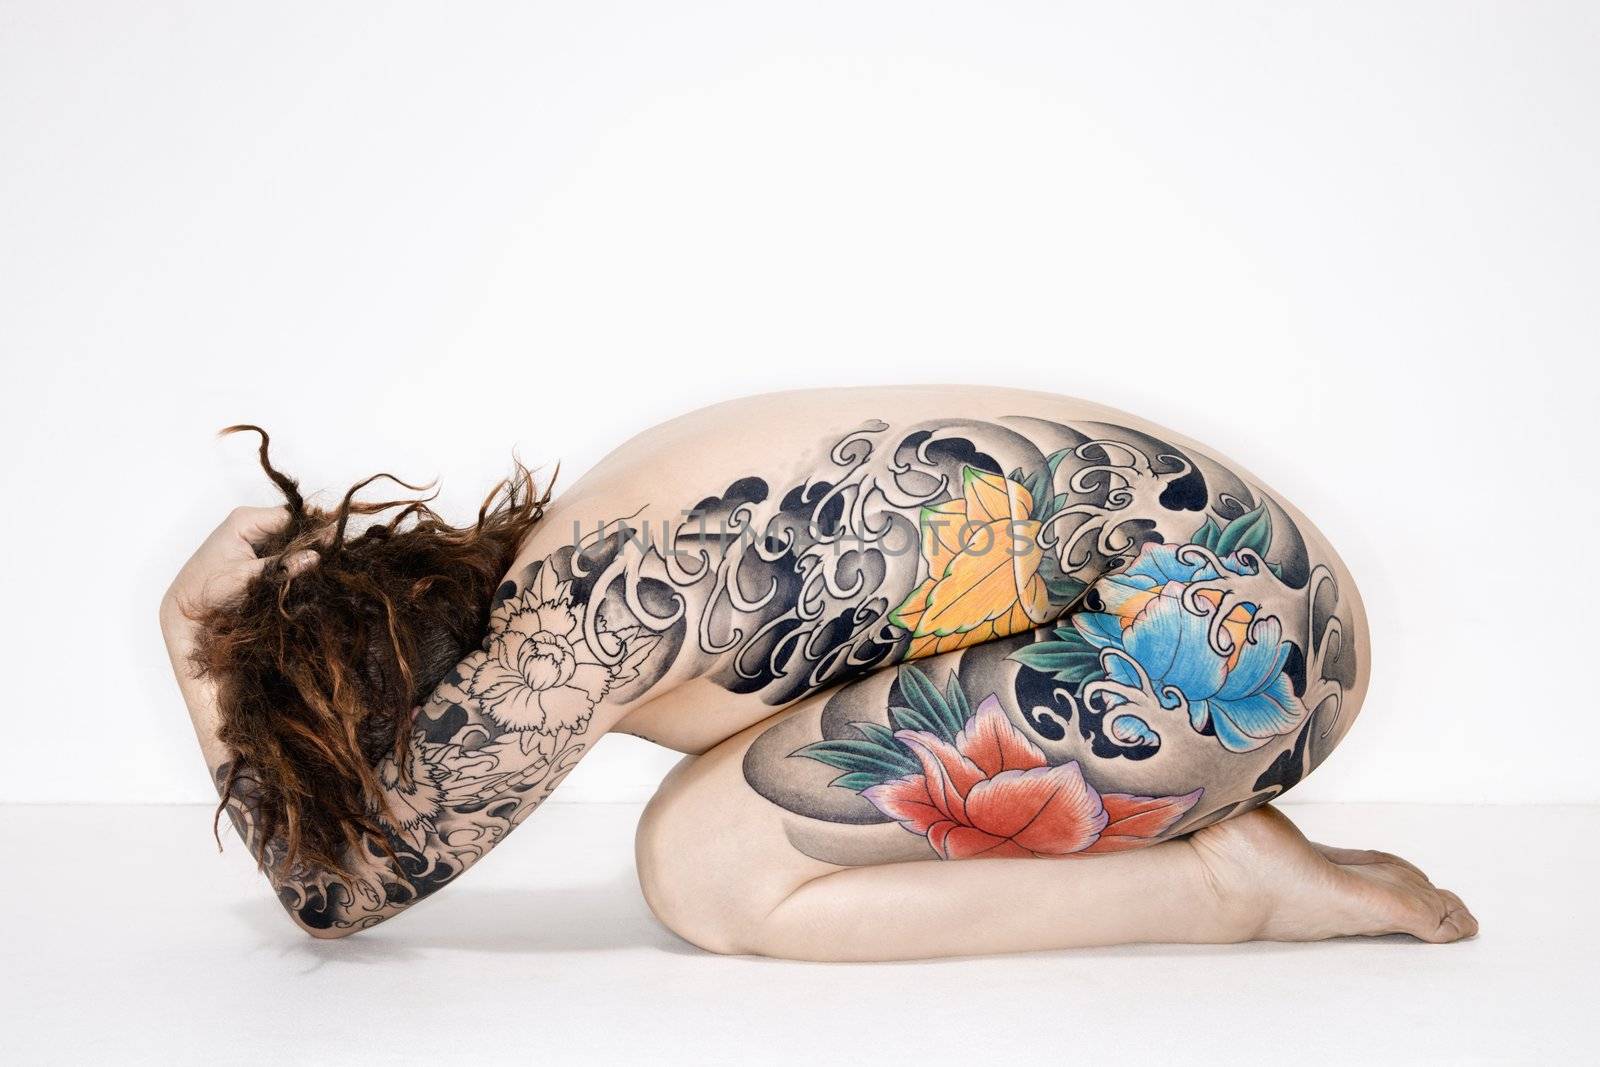 Nude tattooed woman by iofoto